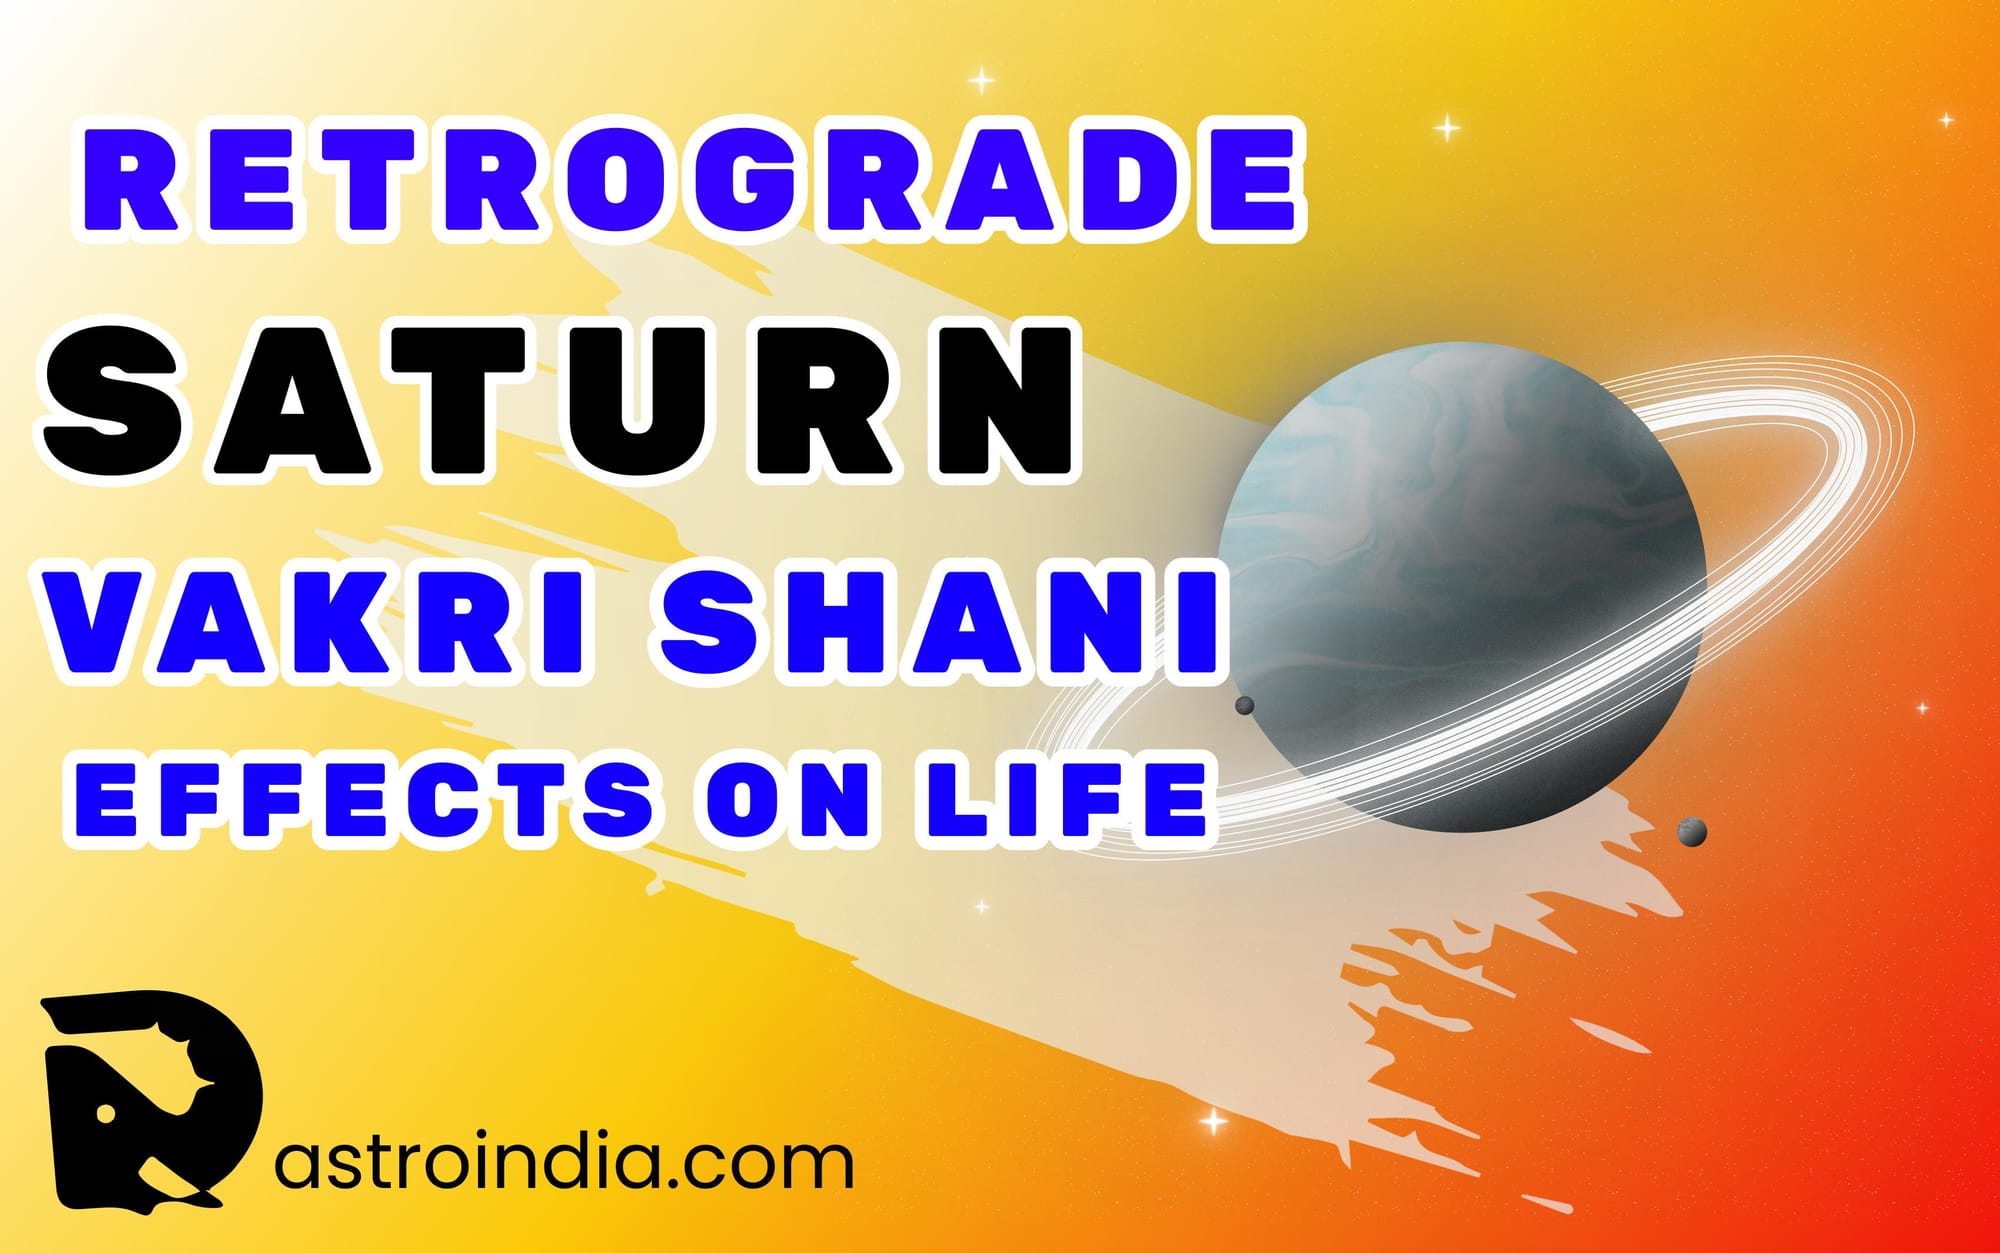 Retrograde Saturn: Vakri Shani Effects on Life